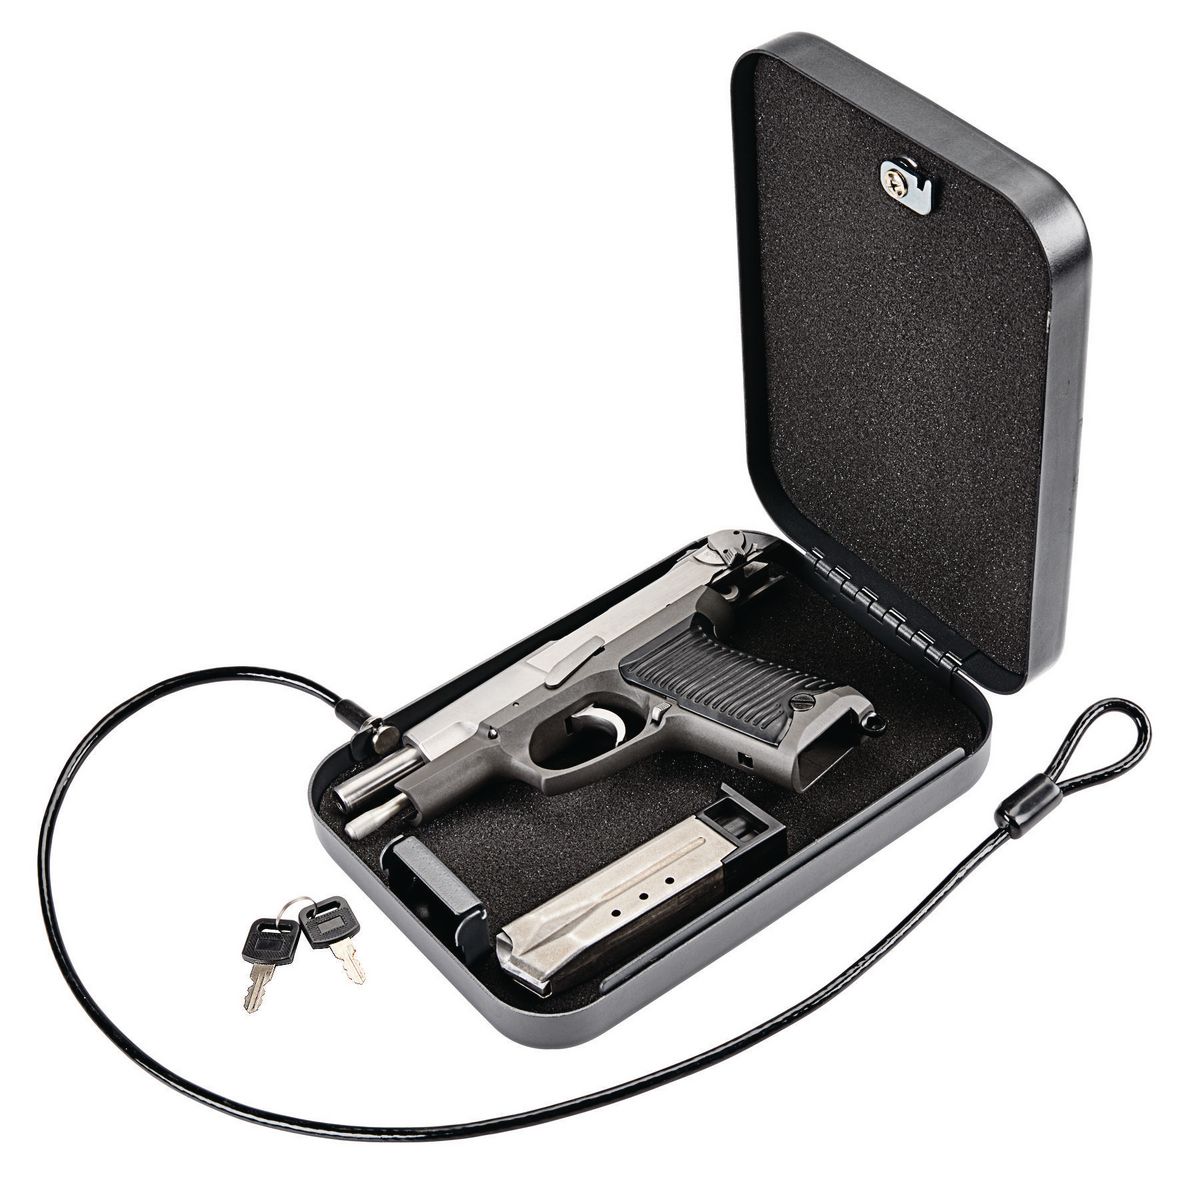 UNION SAFE COMPANY Personal Portable Security Safe - Item 64079